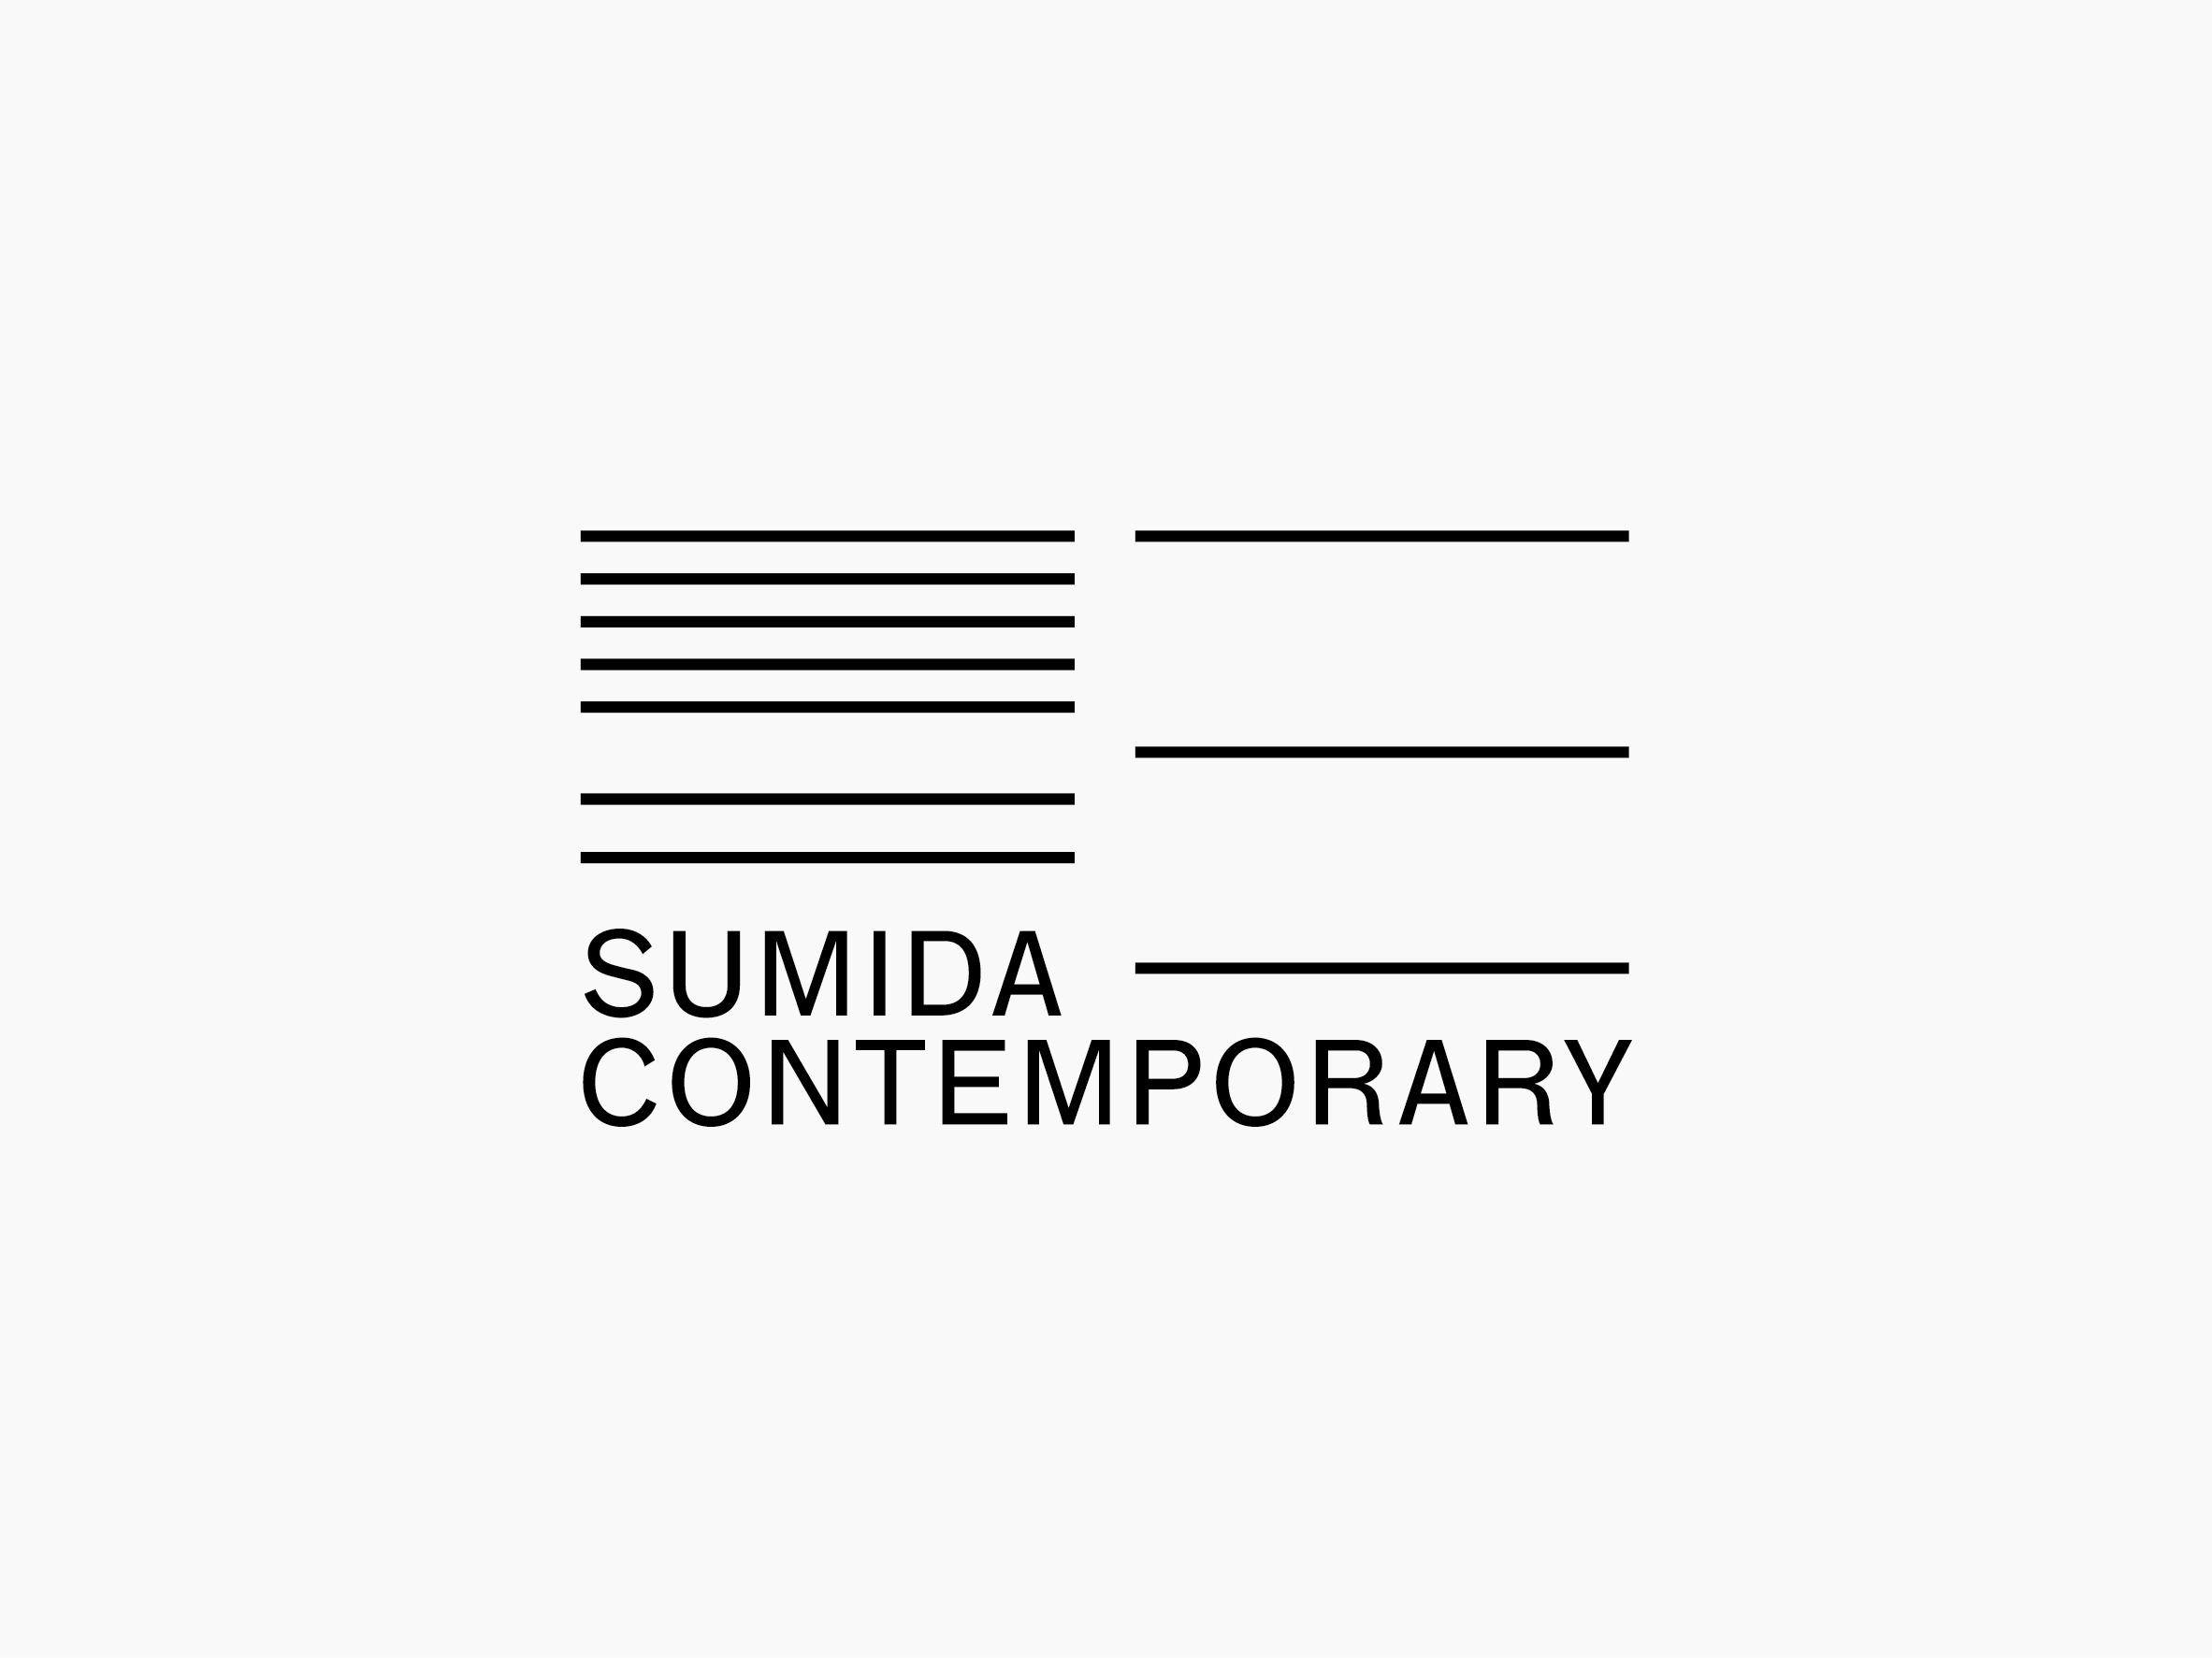 Sumida Contemporary logo type and symbol mark